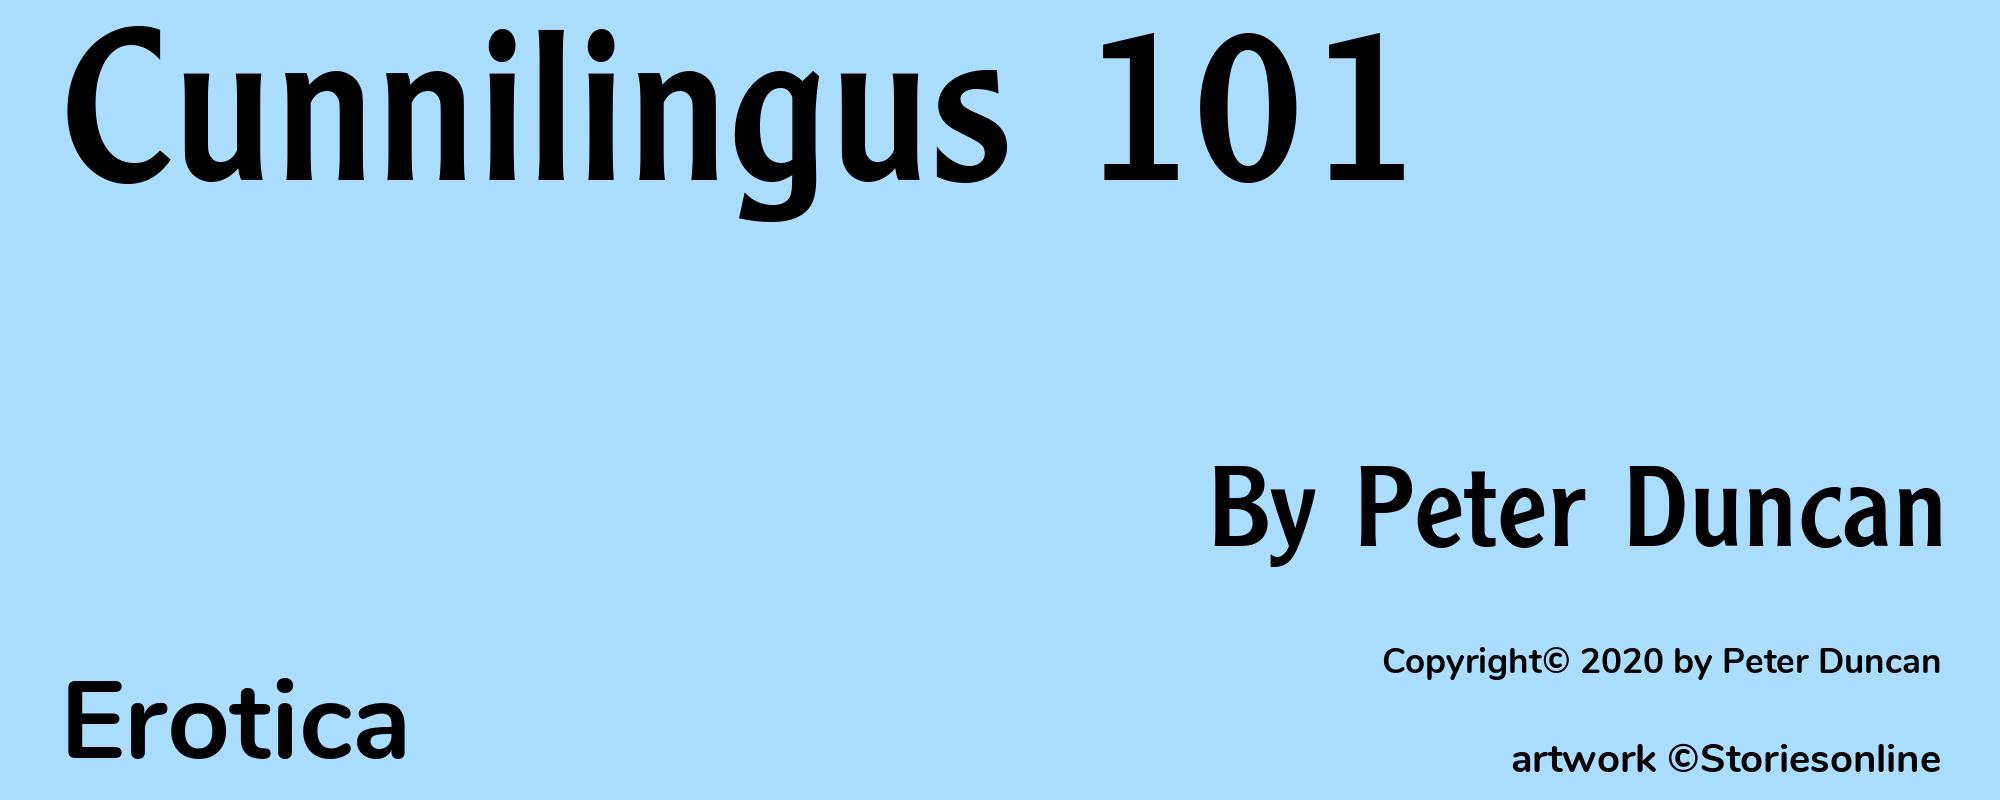 Cunnilingus 101 - Cover